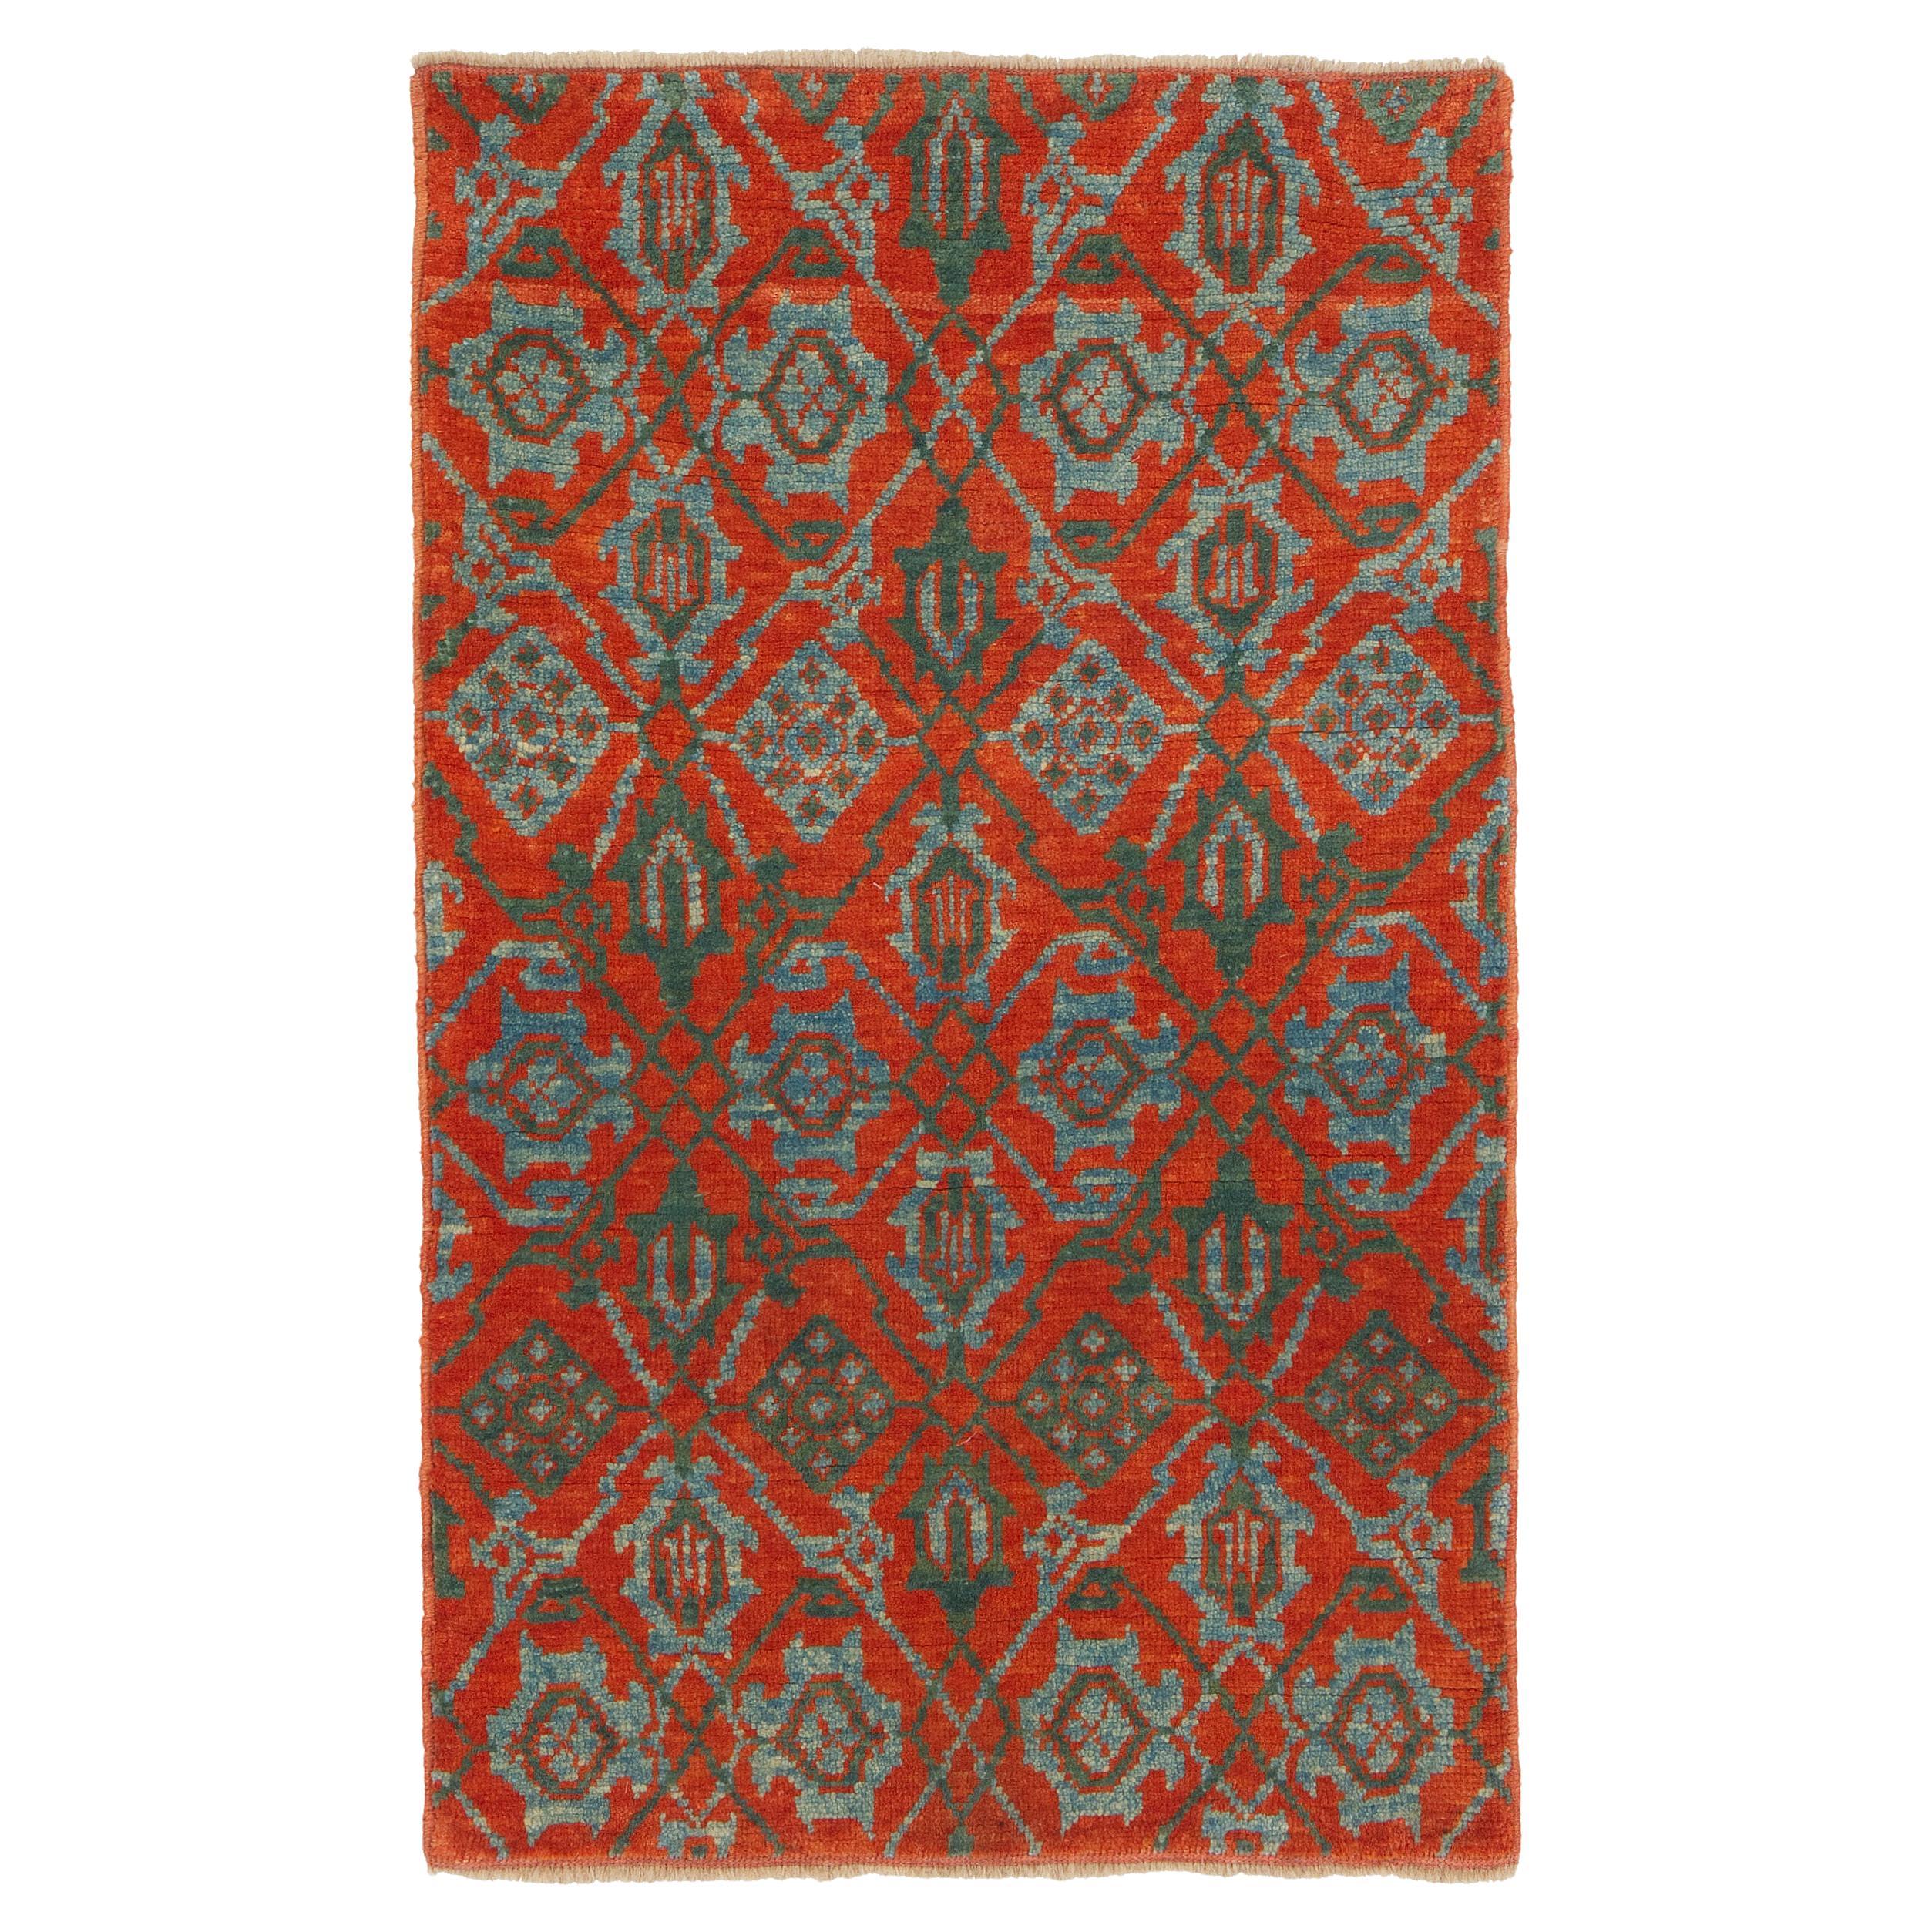 Ararat Rugs Mamluk Wagireh Rug Lattice Pattern Revival Carpet Natural Dyed For Sale